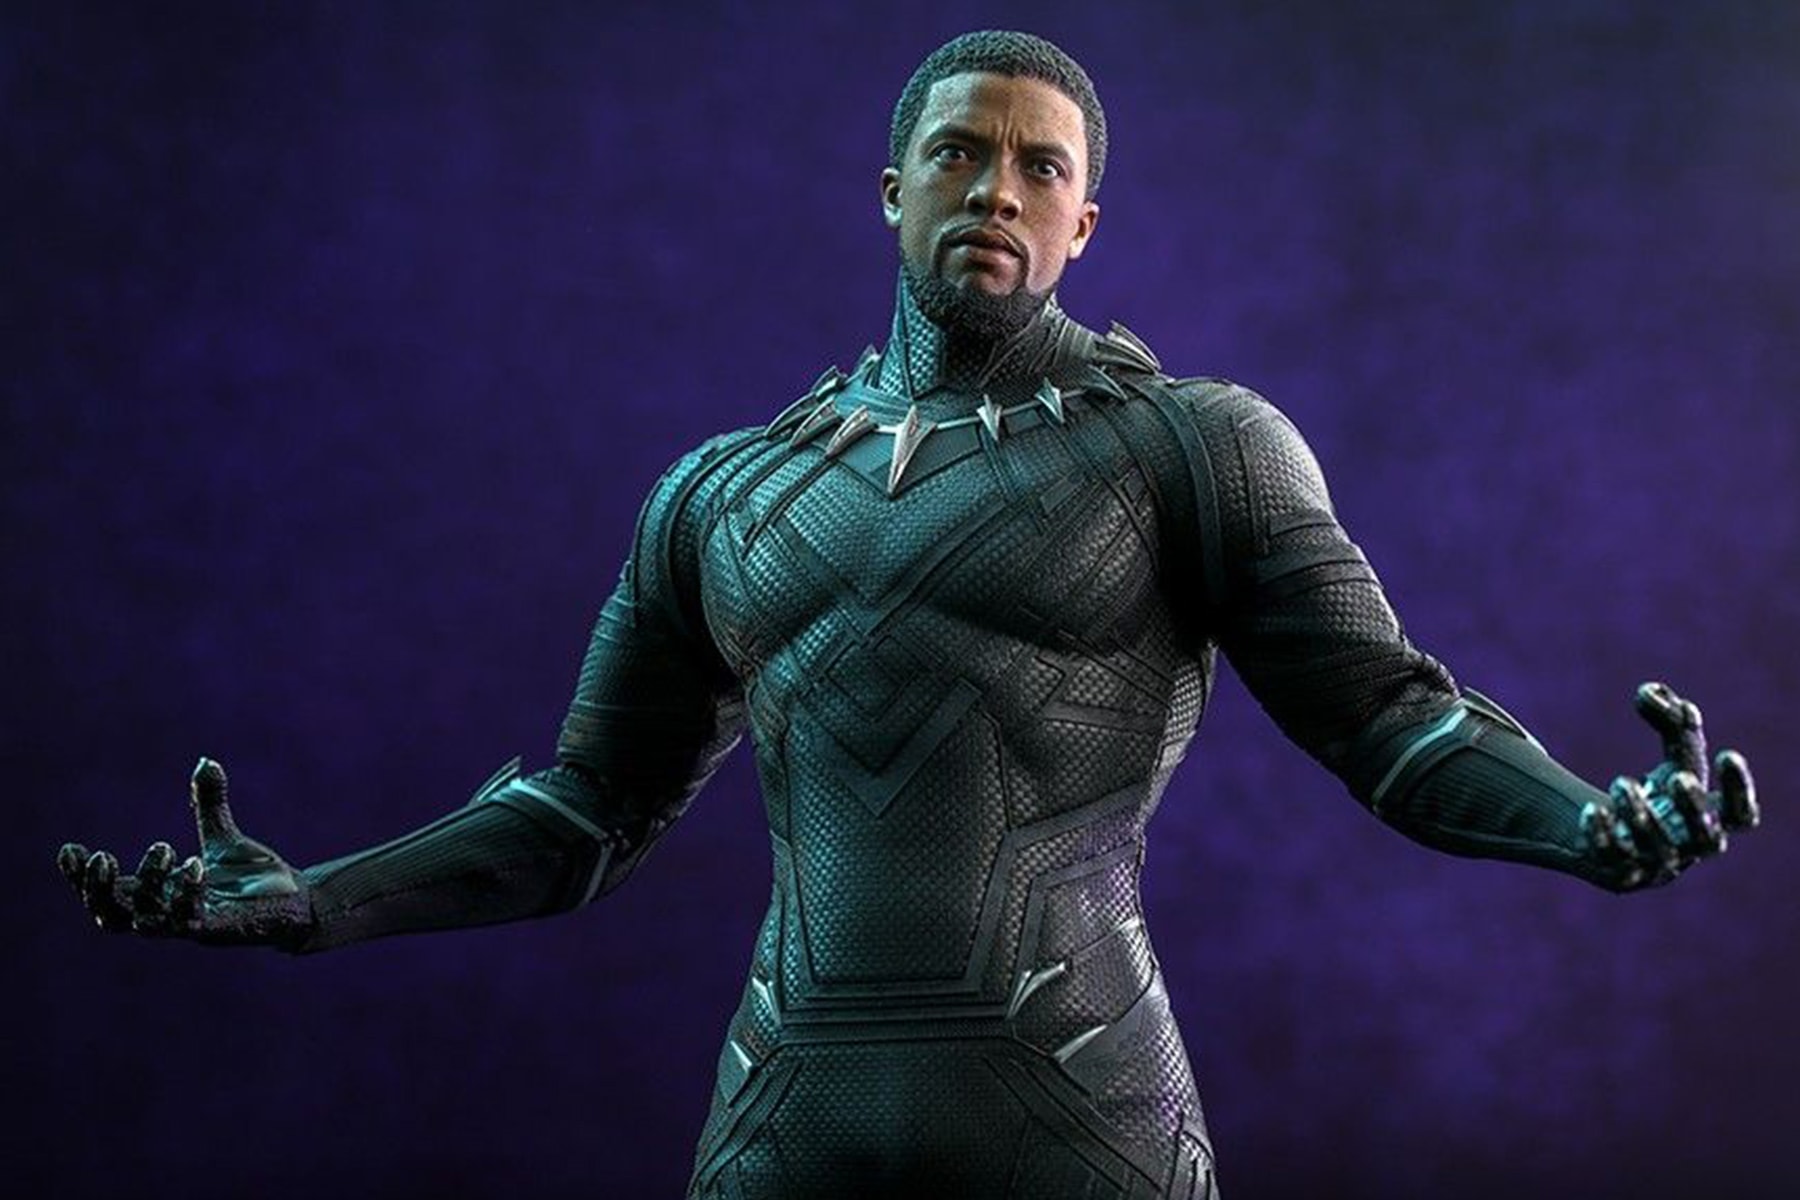 Hot Toys《黑豹 Black Panther》初代戰服版本 1:6 比例雕塑模型正式登場